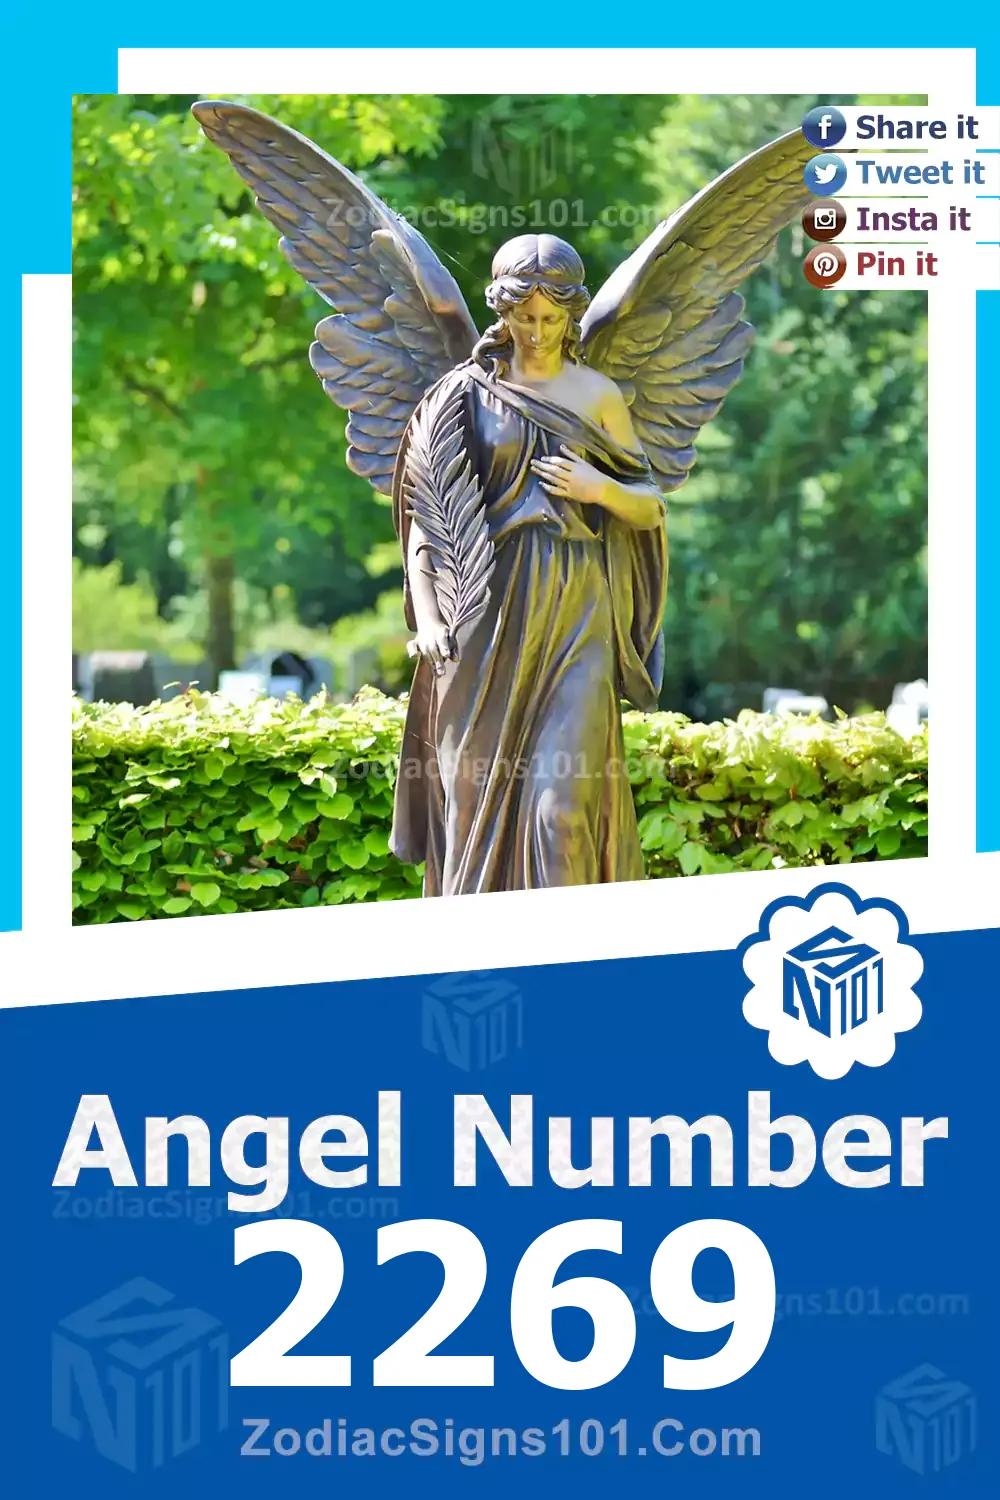 2269-Angel-Number-Meaning.jpg